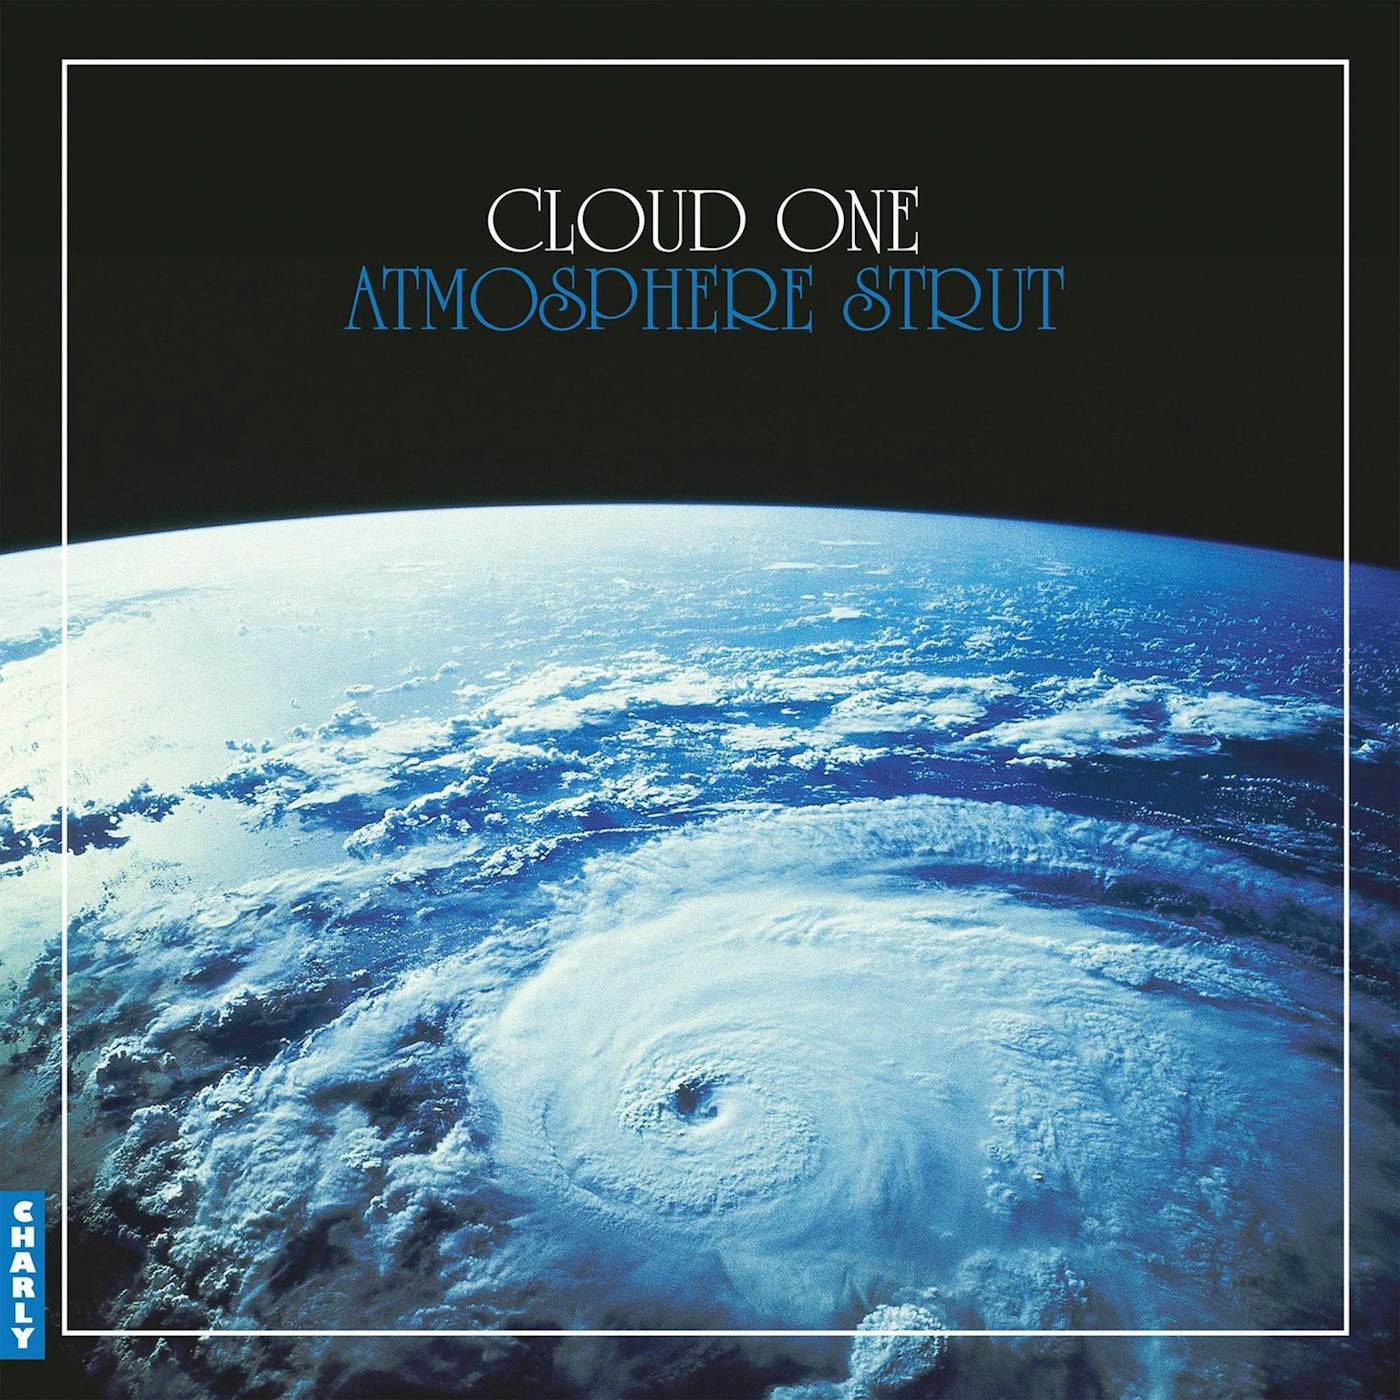 Cloud One Atmosphere Strut (Double 12 Inch Vinyl) Vinyl Record